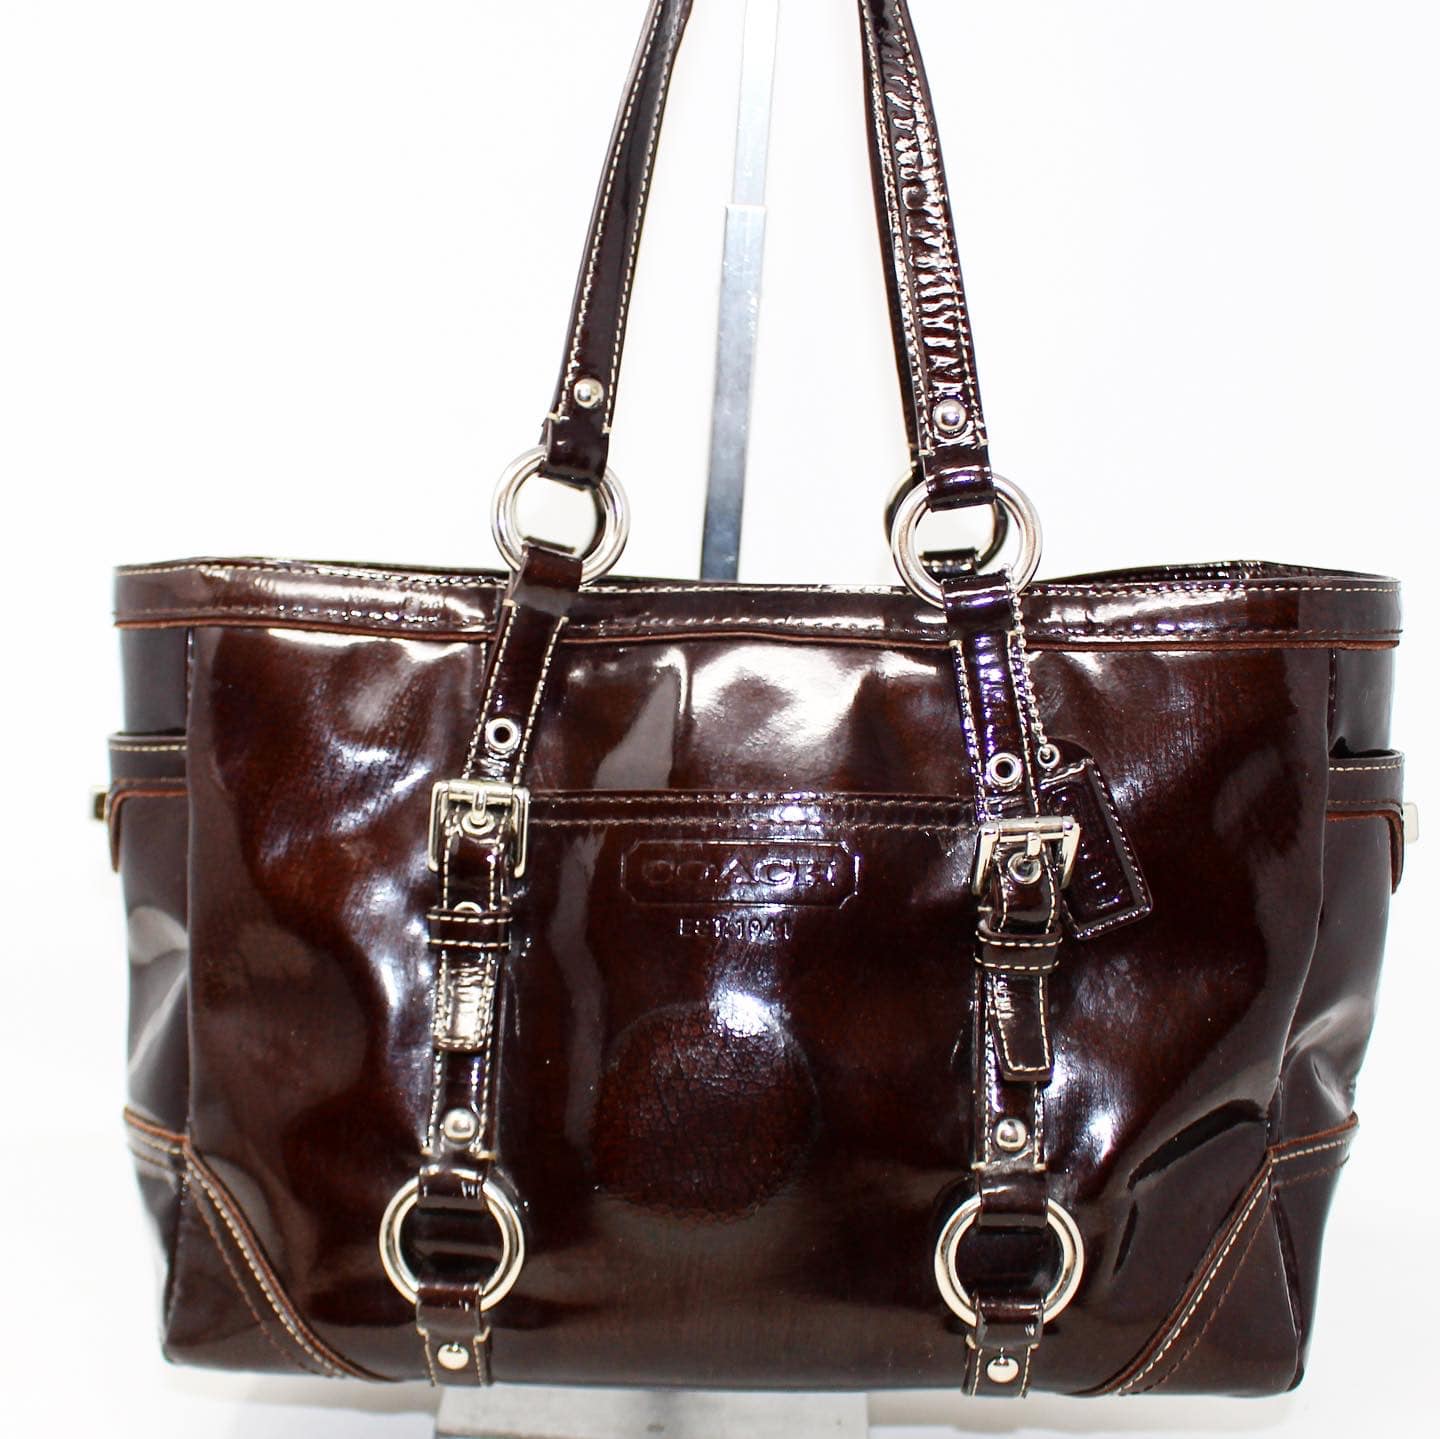 COACH #42320 Purple Patent Leather Handbag 1